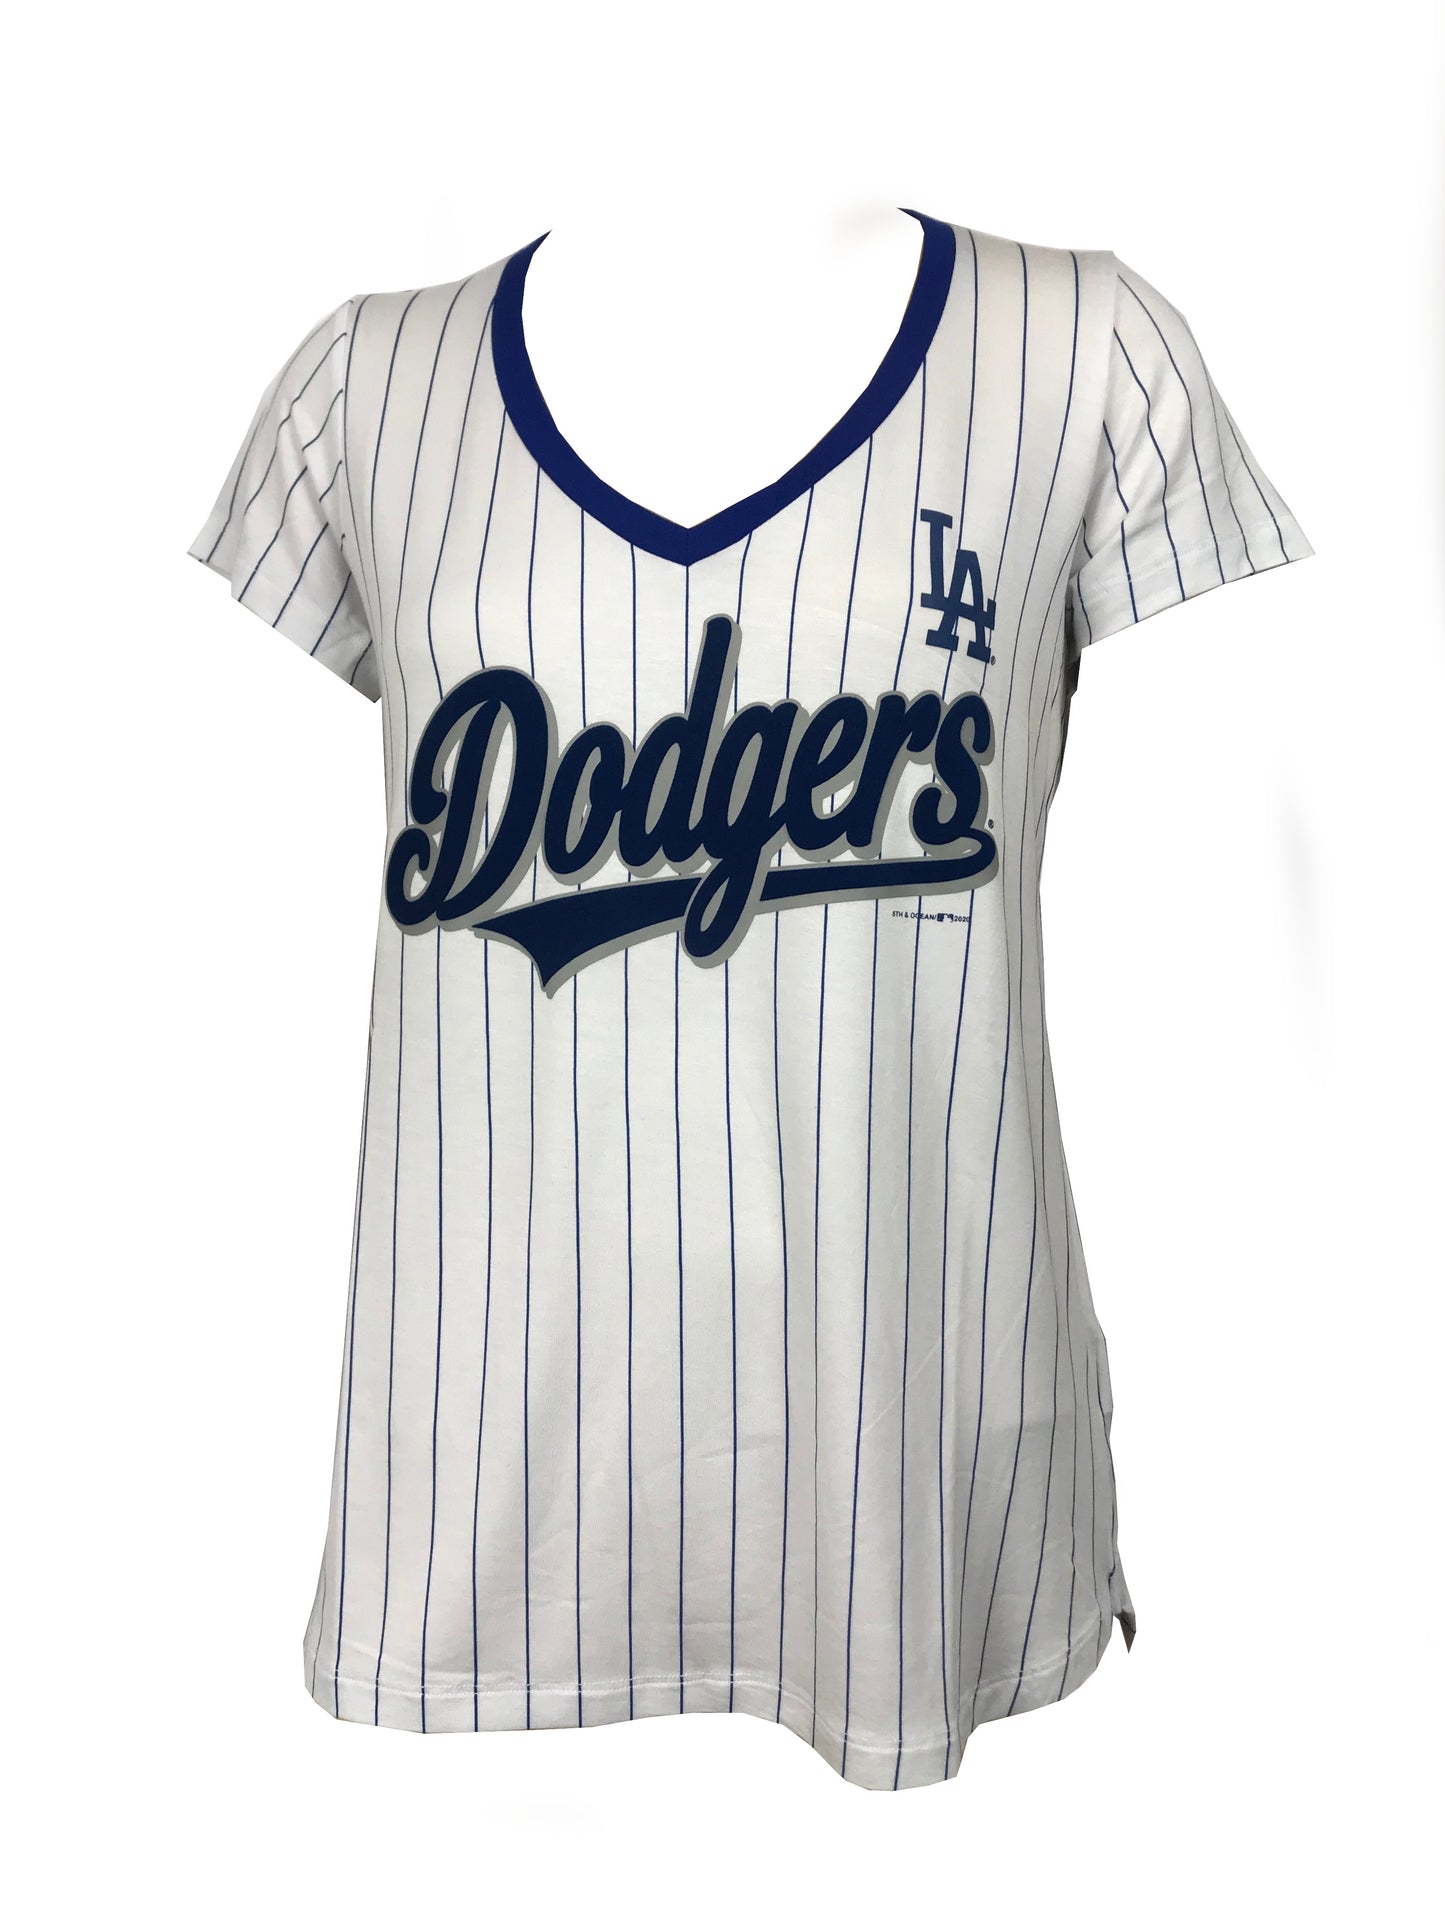 Official Women's Los Angeles Dodgers Gear, Womens Dodgers Apparel